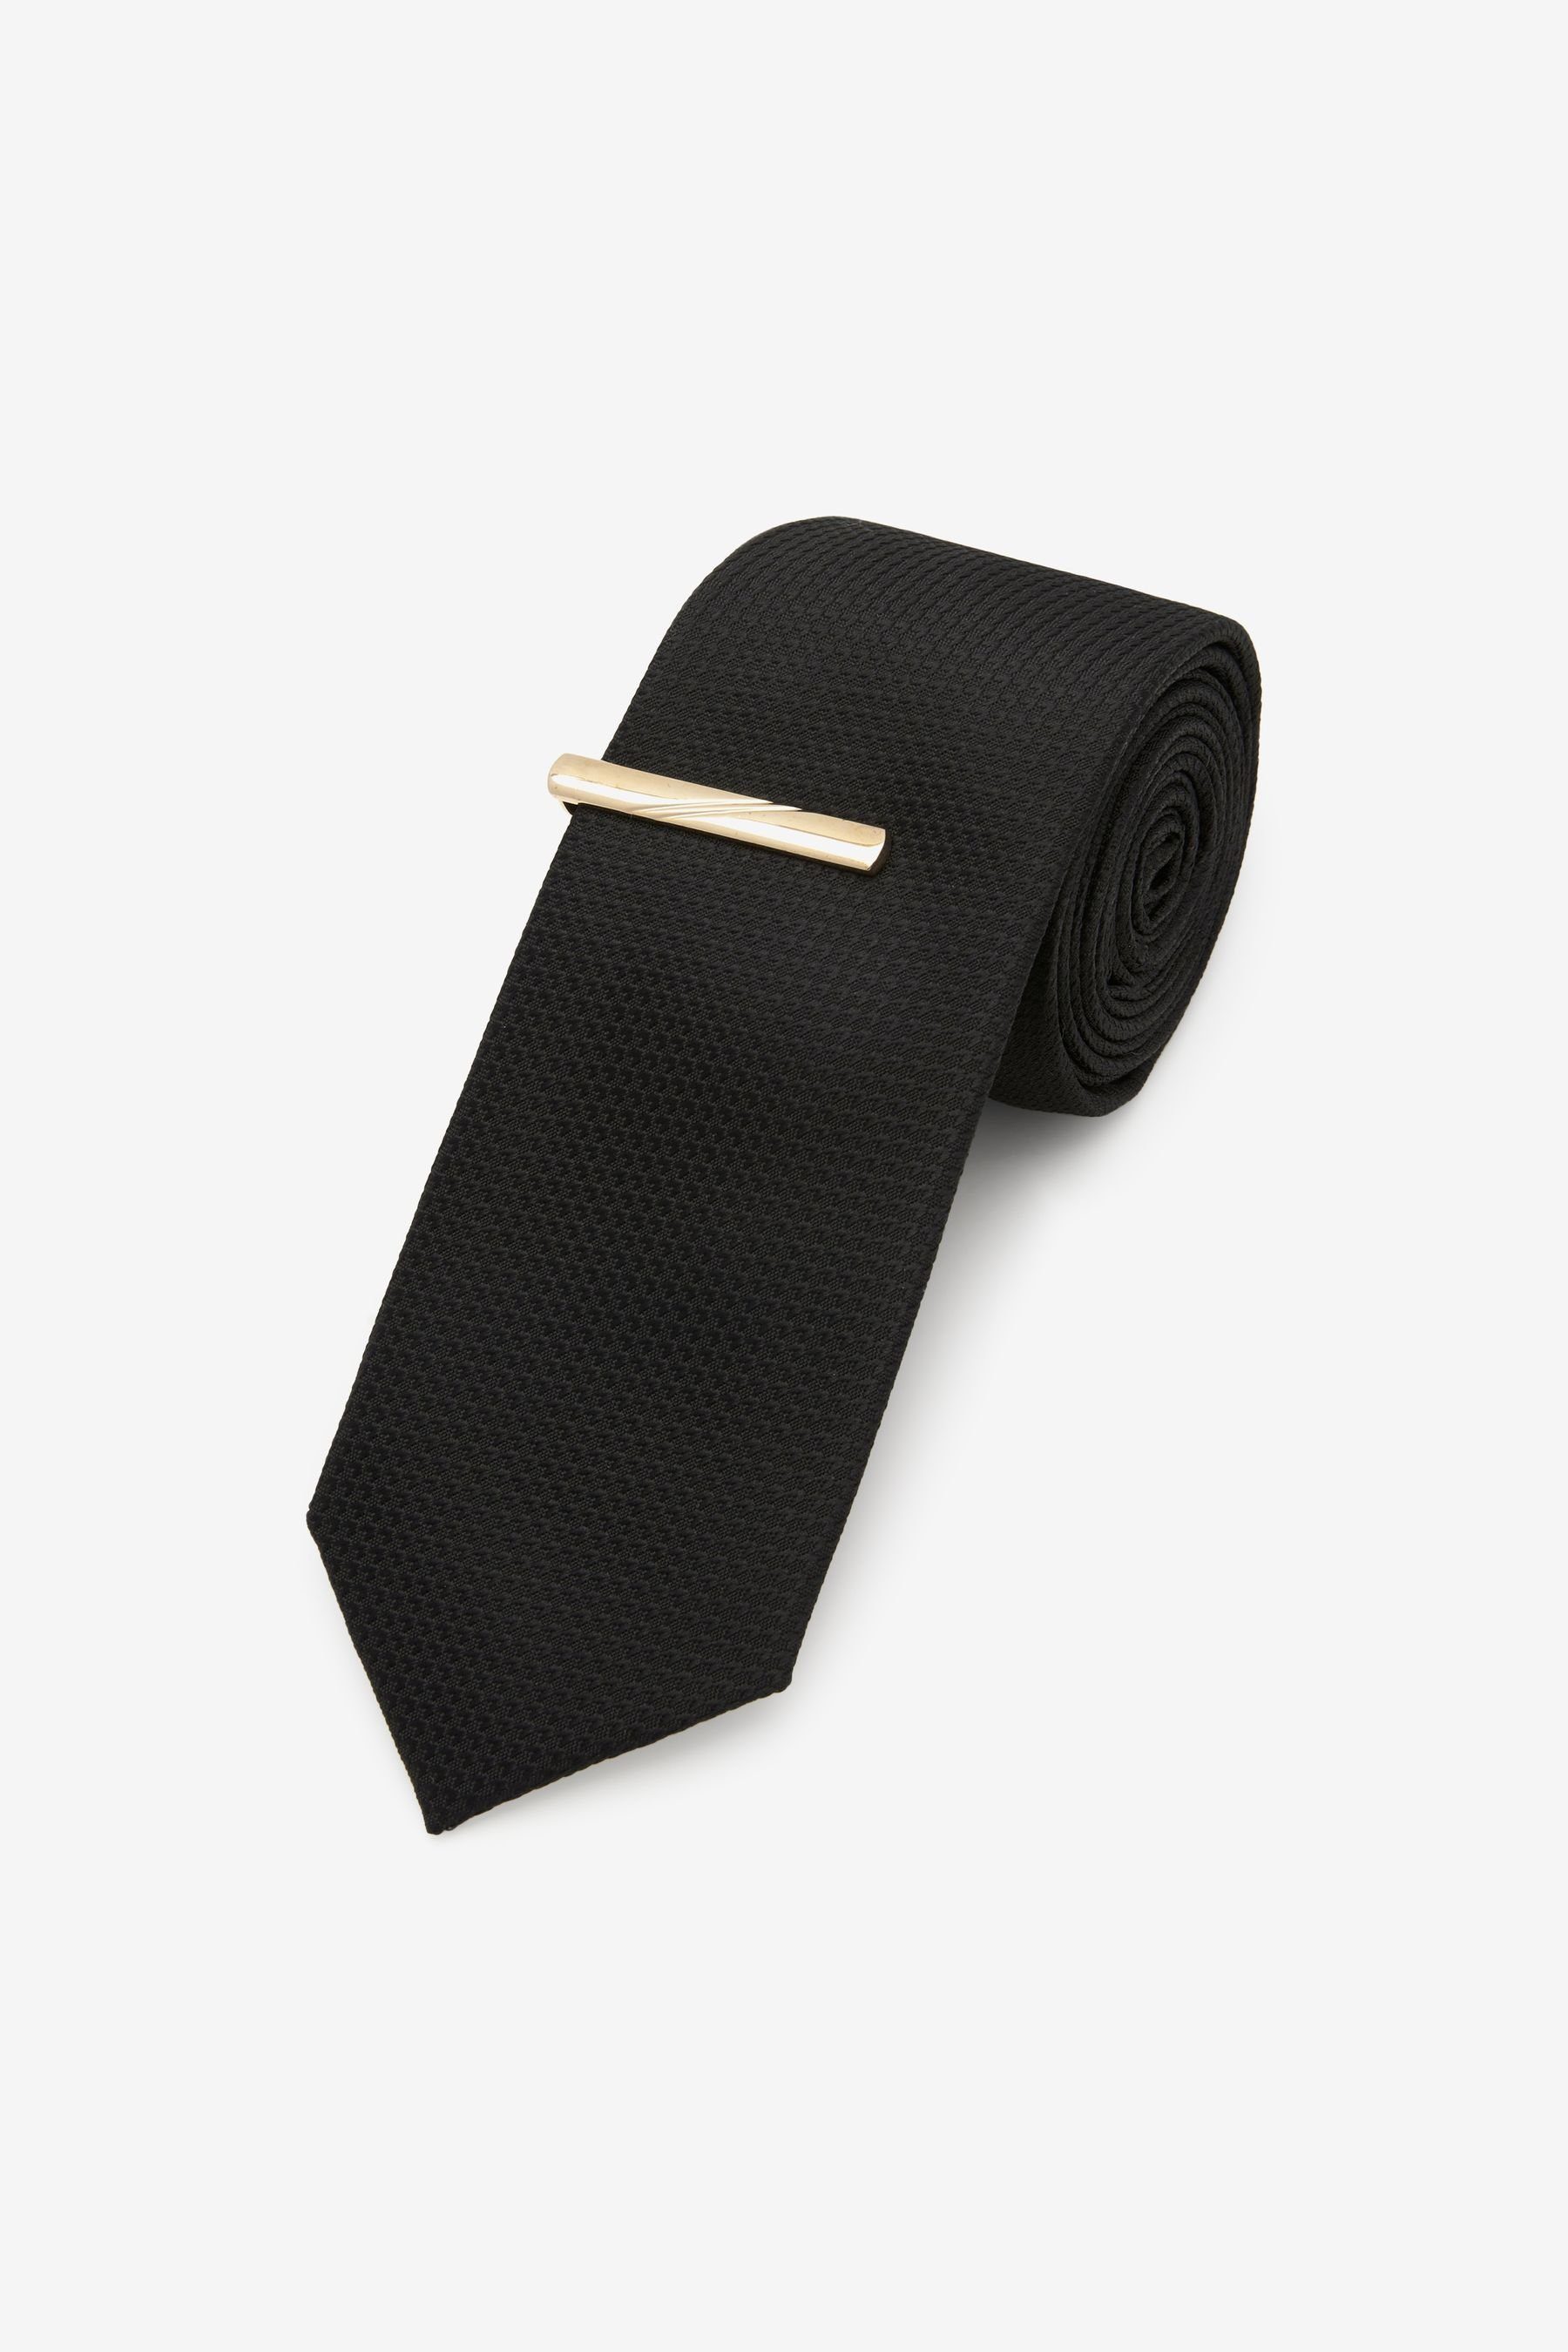 Next Krawatte Klammer aus + Recyclingpolyester Krawatte Schmale Black/Gold (2-St)